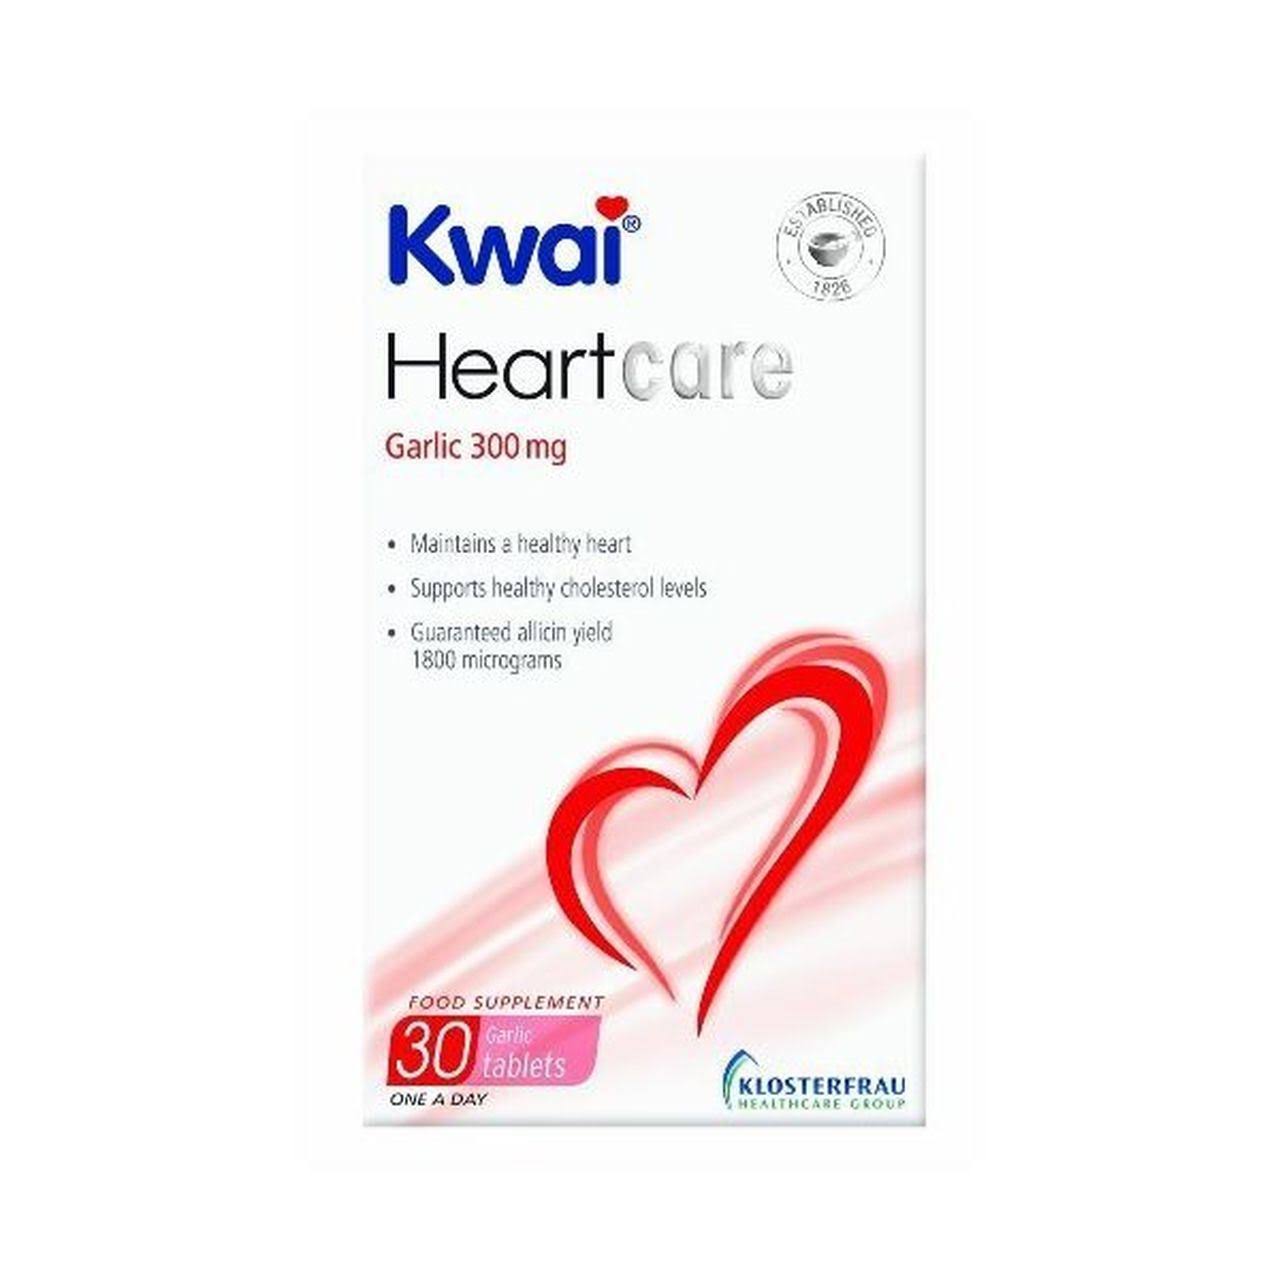 Kwai Heart Care Garlic Dietary Supplement - 300mg, 30ct